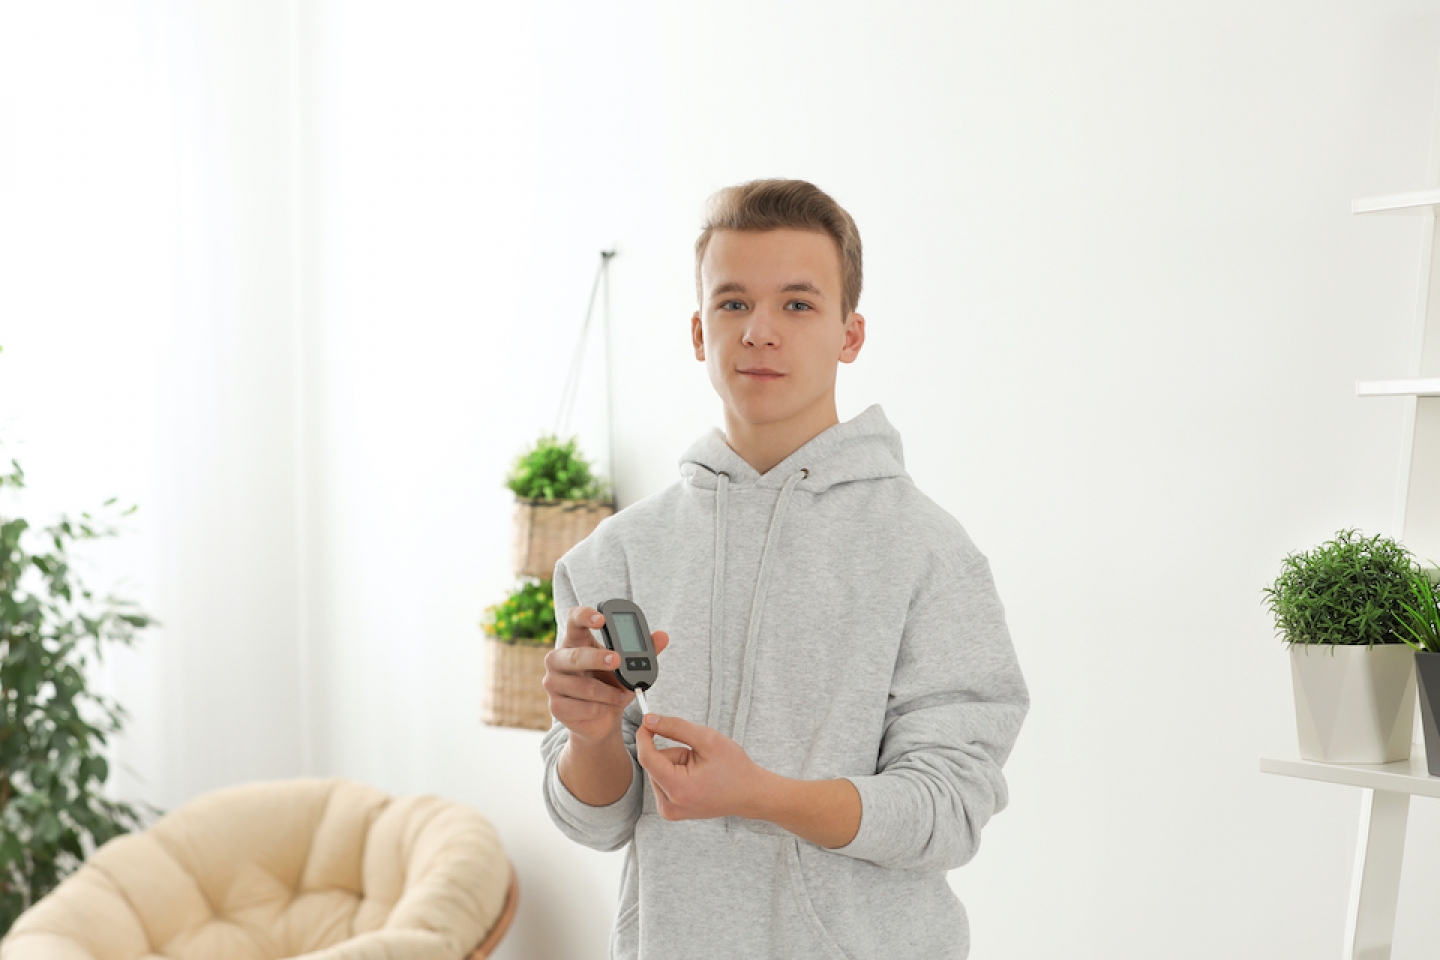 Teen boy holding digital glucometer at home